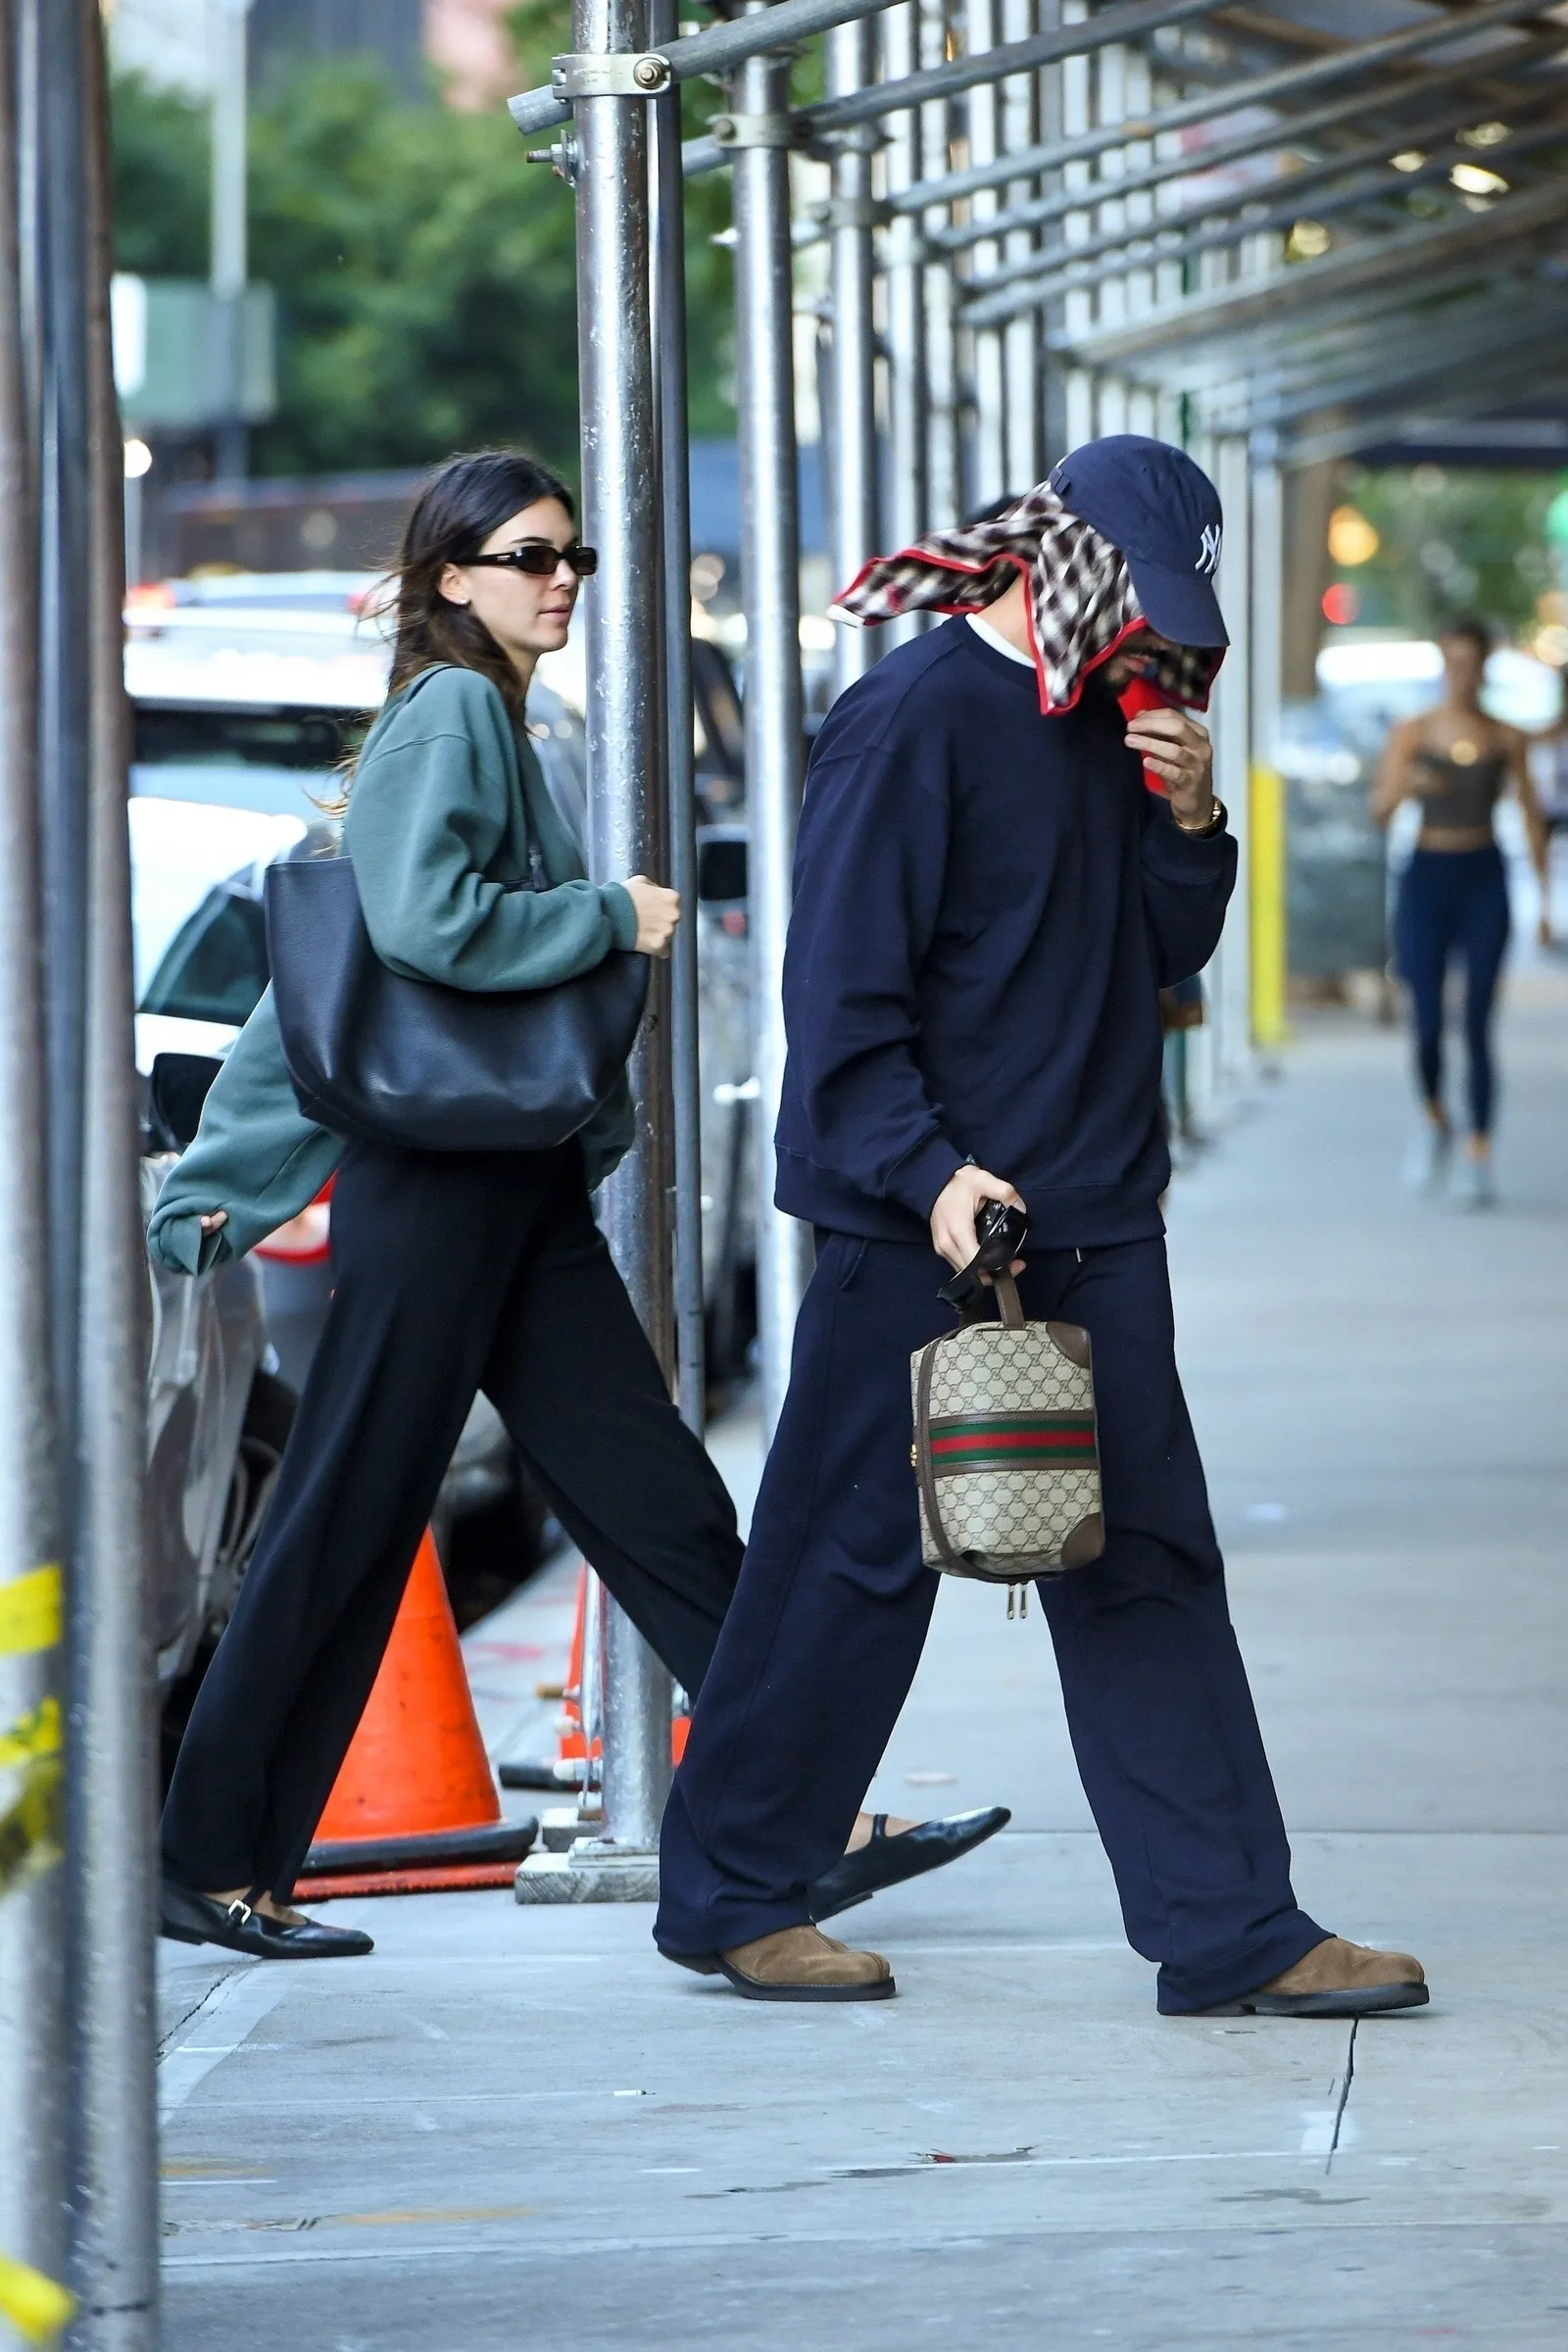 Inspirasi Outfit Couple dari Kendall Jenner dan Bad Bunny